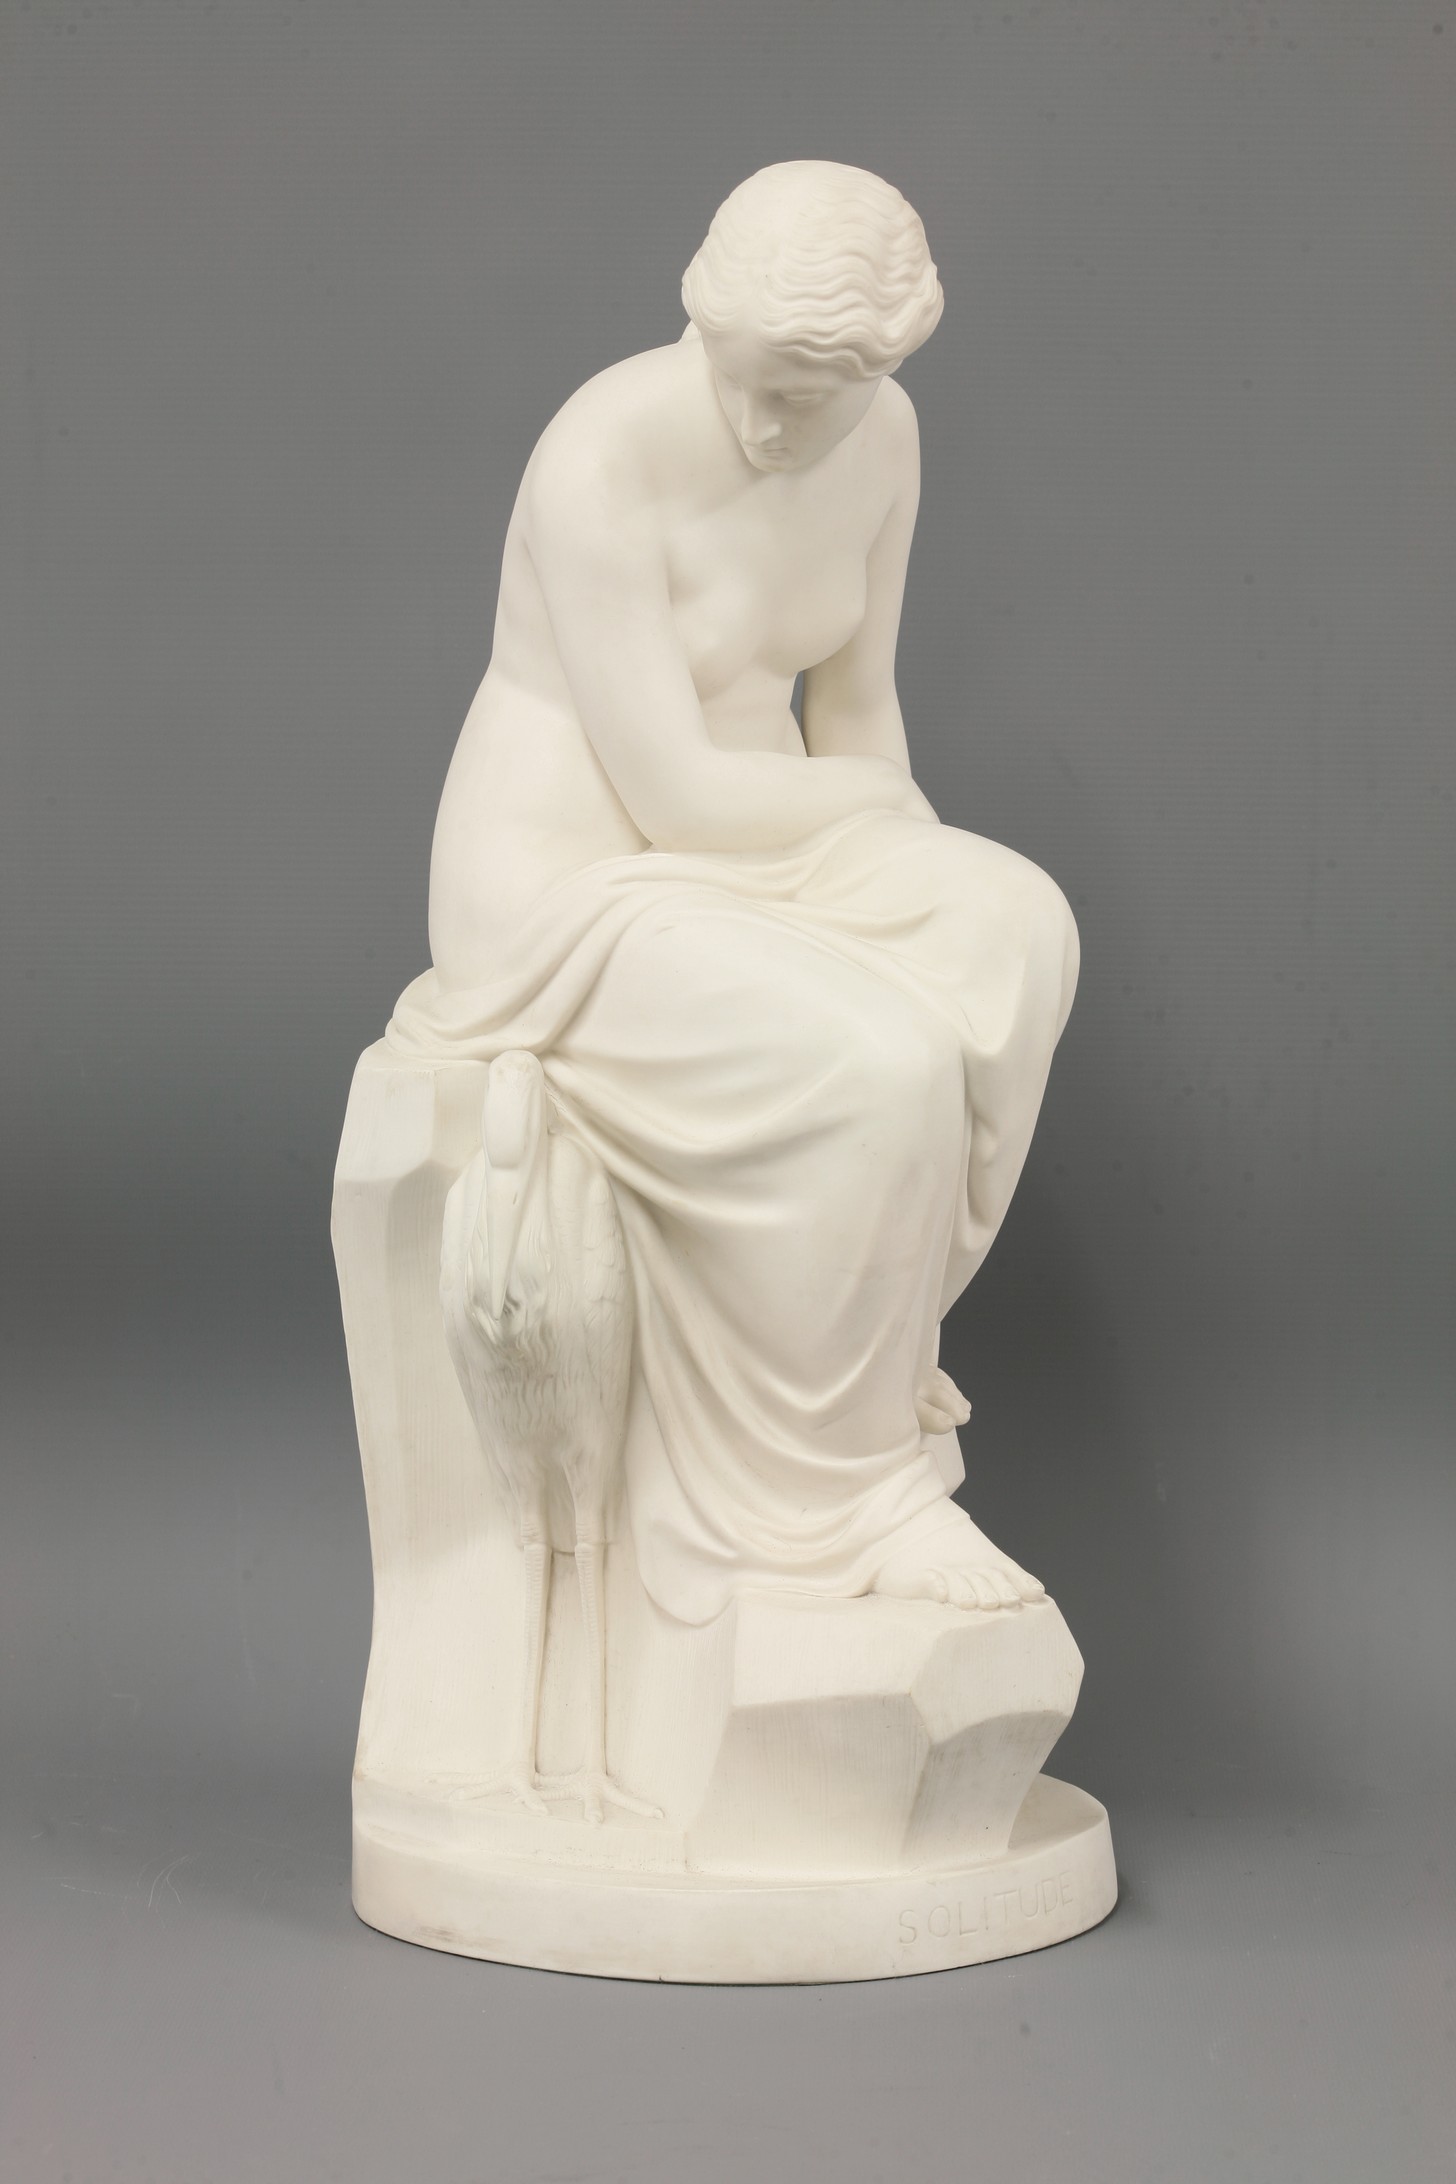 A Minton Parian ware Figure,
'Solitude', impressed 'J Lawlor. Sculp. Art Union of London 1852',
51cm